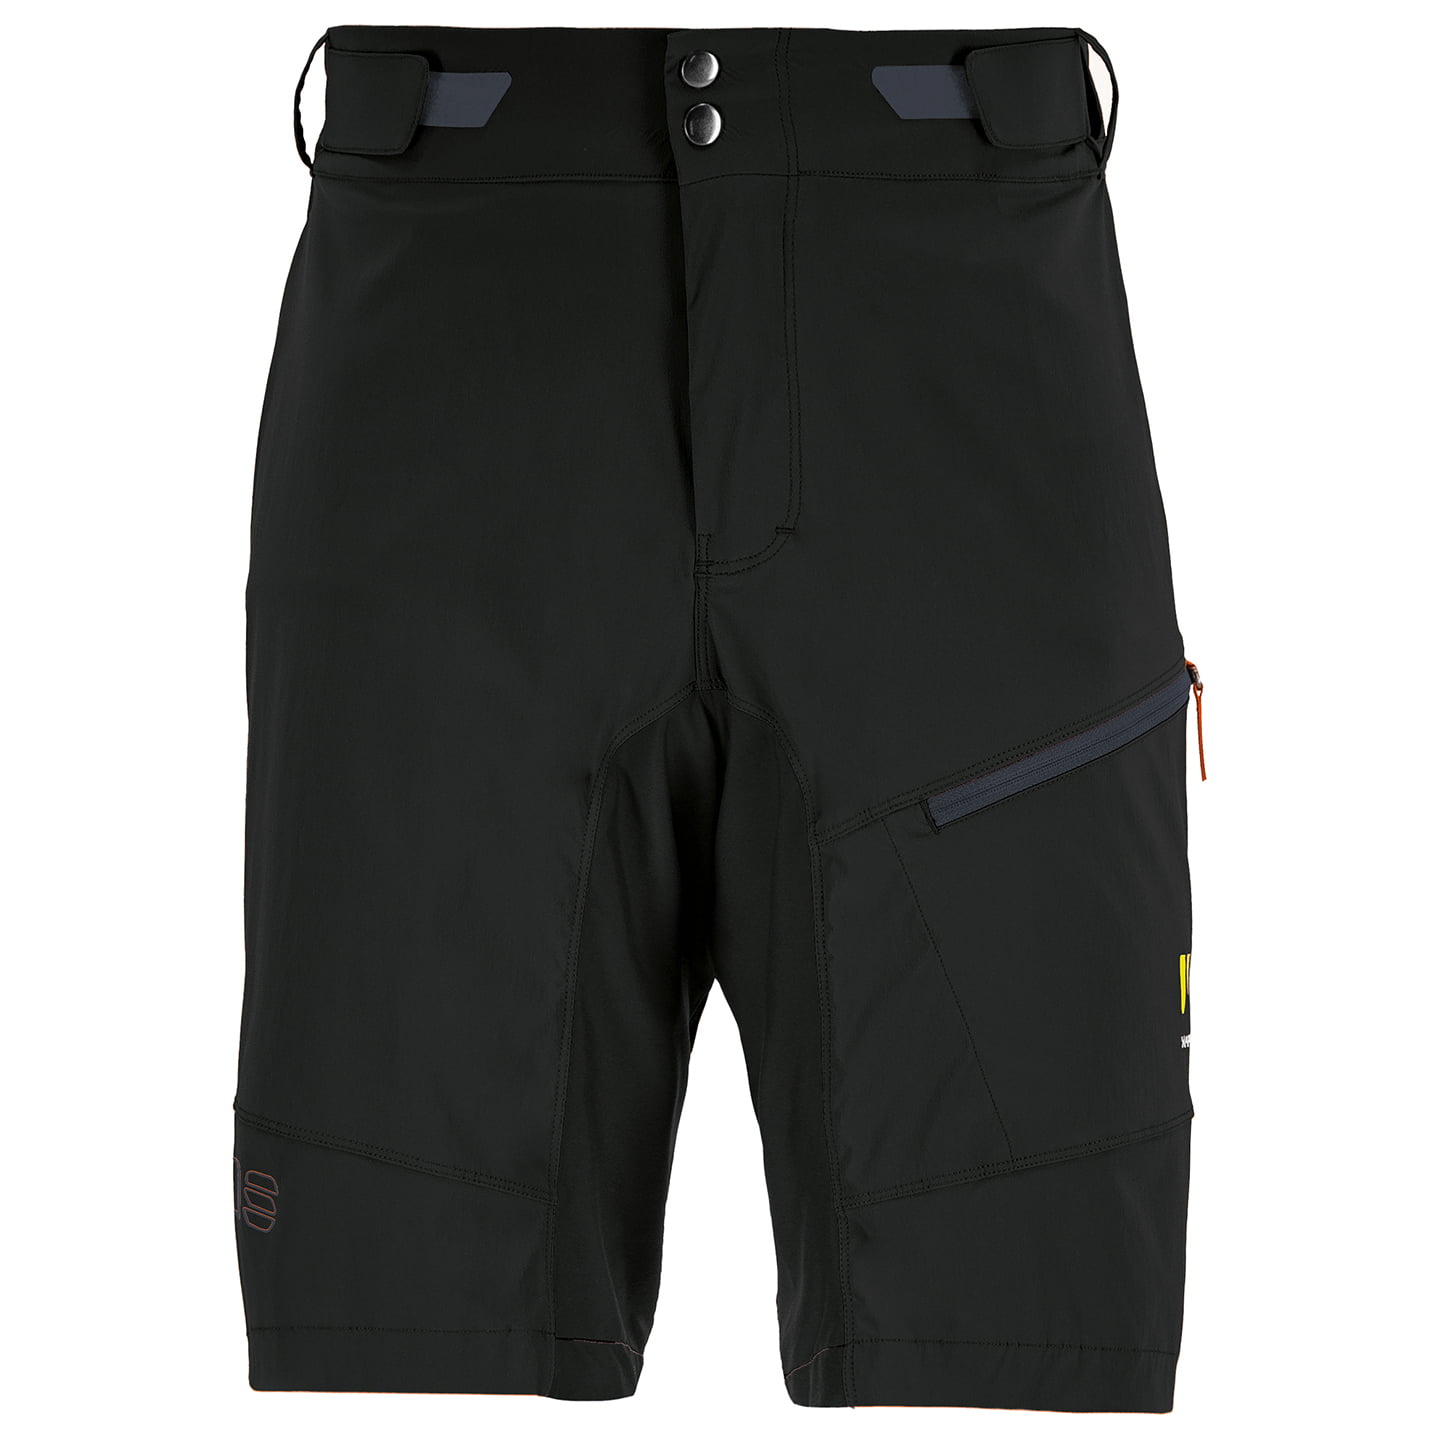 KARPOS Val Viola w/o Pad Bike Shorts, for men, size 2XL, MTB shorts, MTB clothing